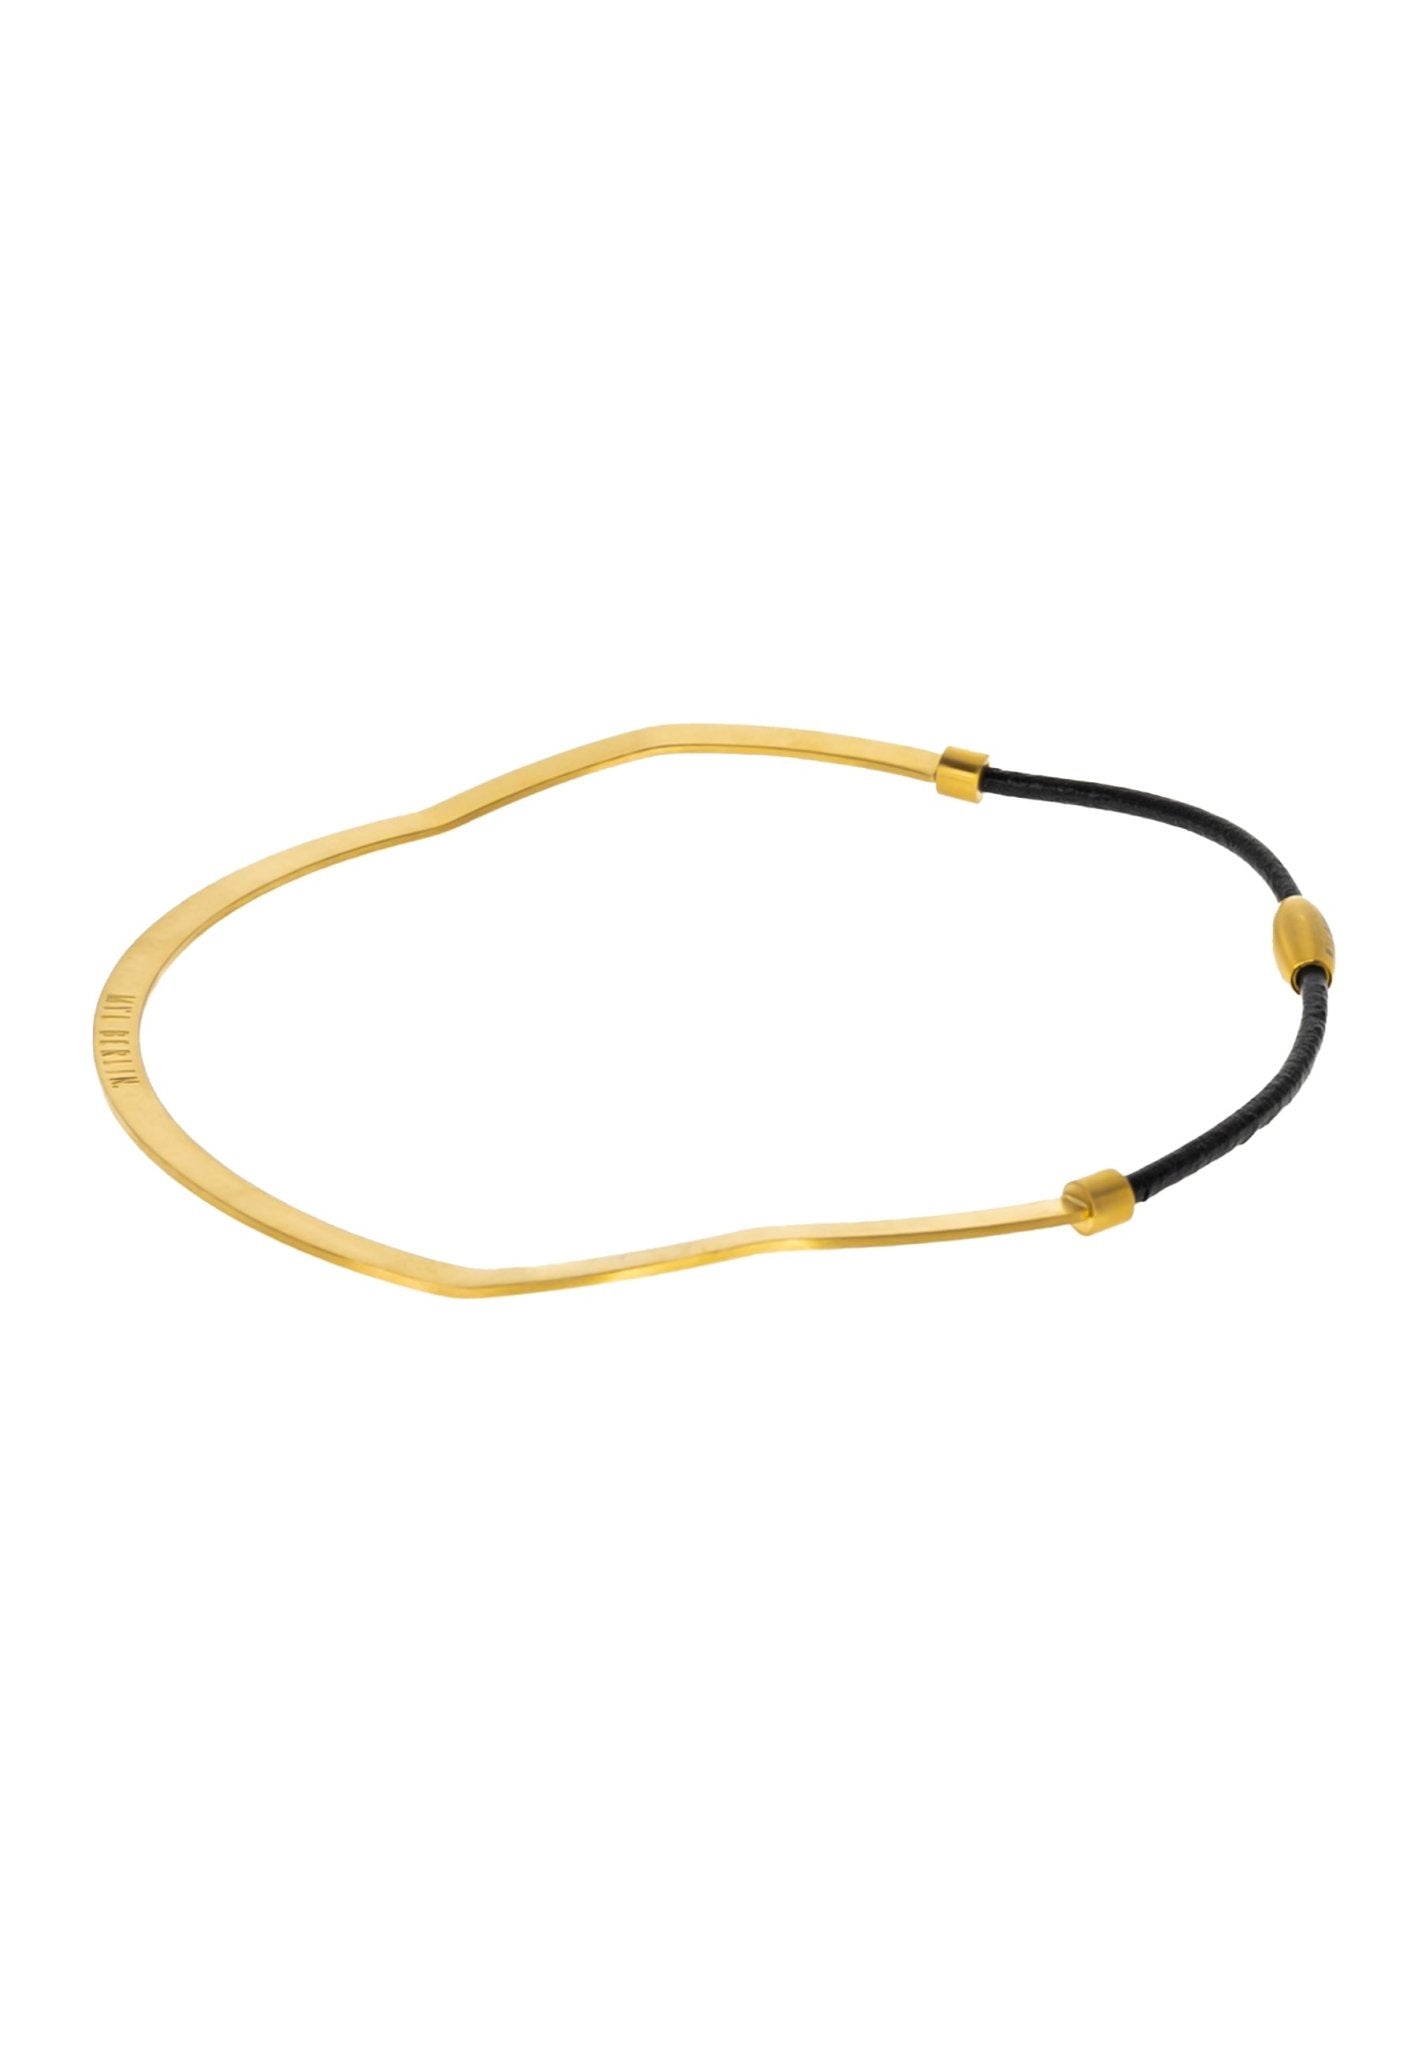 Collar Necklace “Collier" - MYL BERLIN - 4260654111378 - 4260654111378